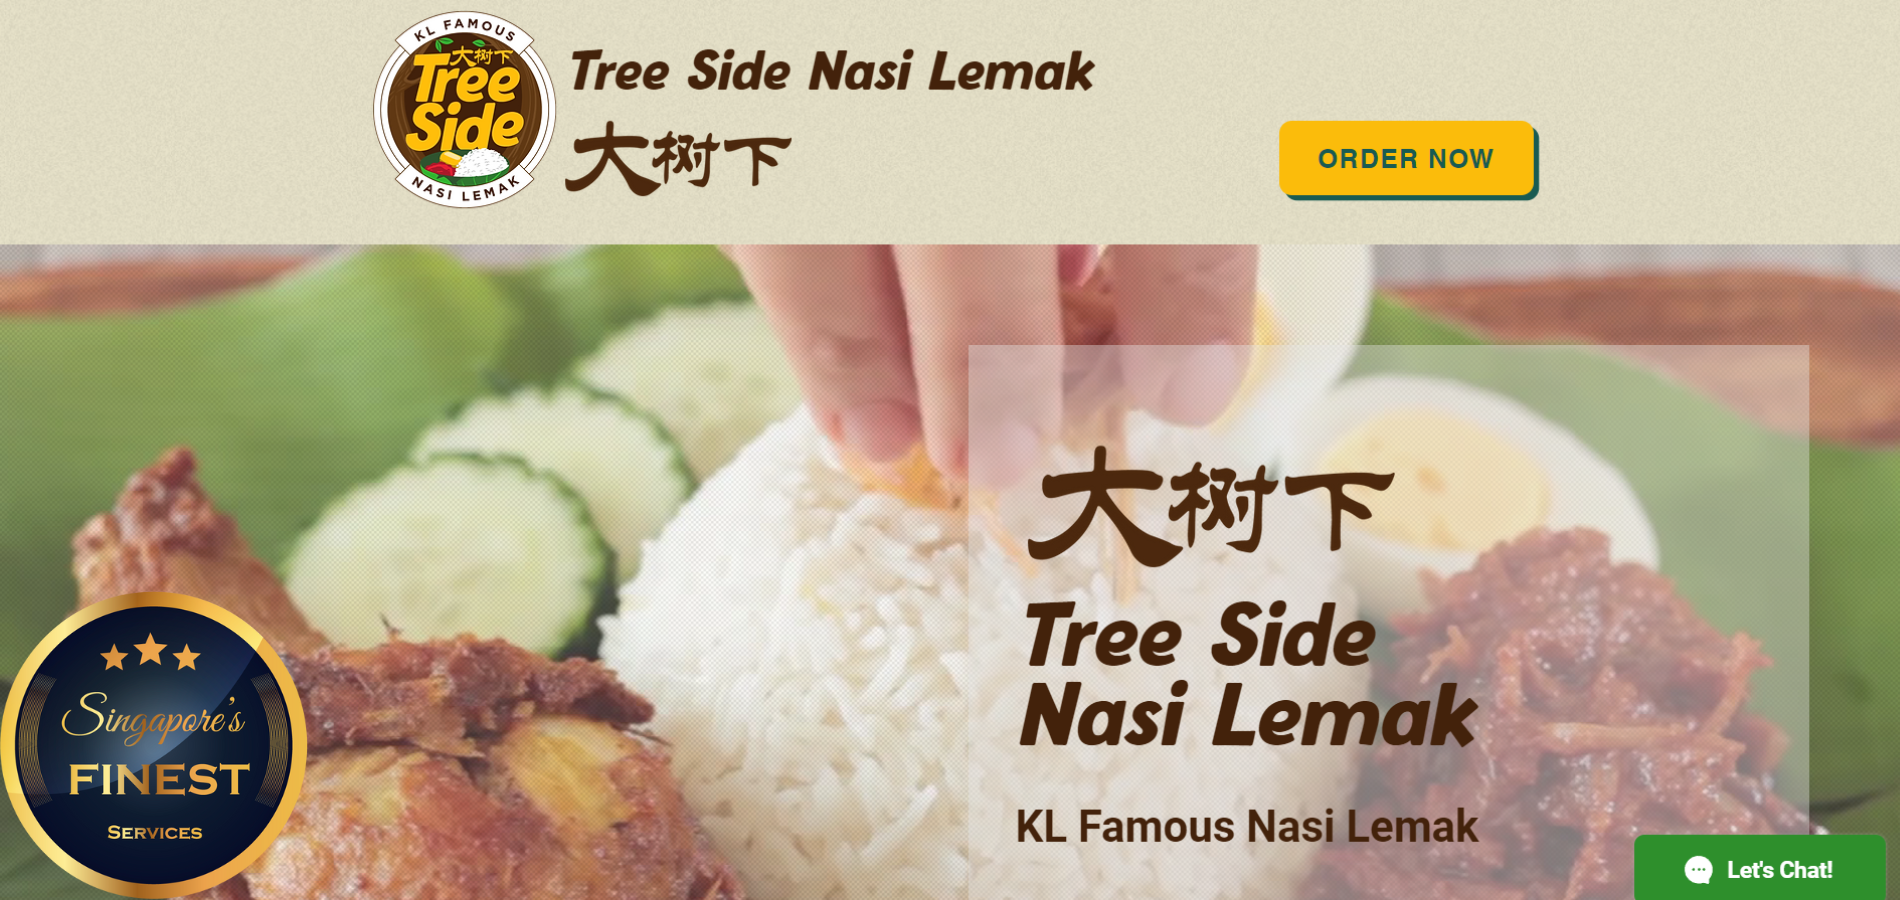 Best Nasi Lemak In Singapore